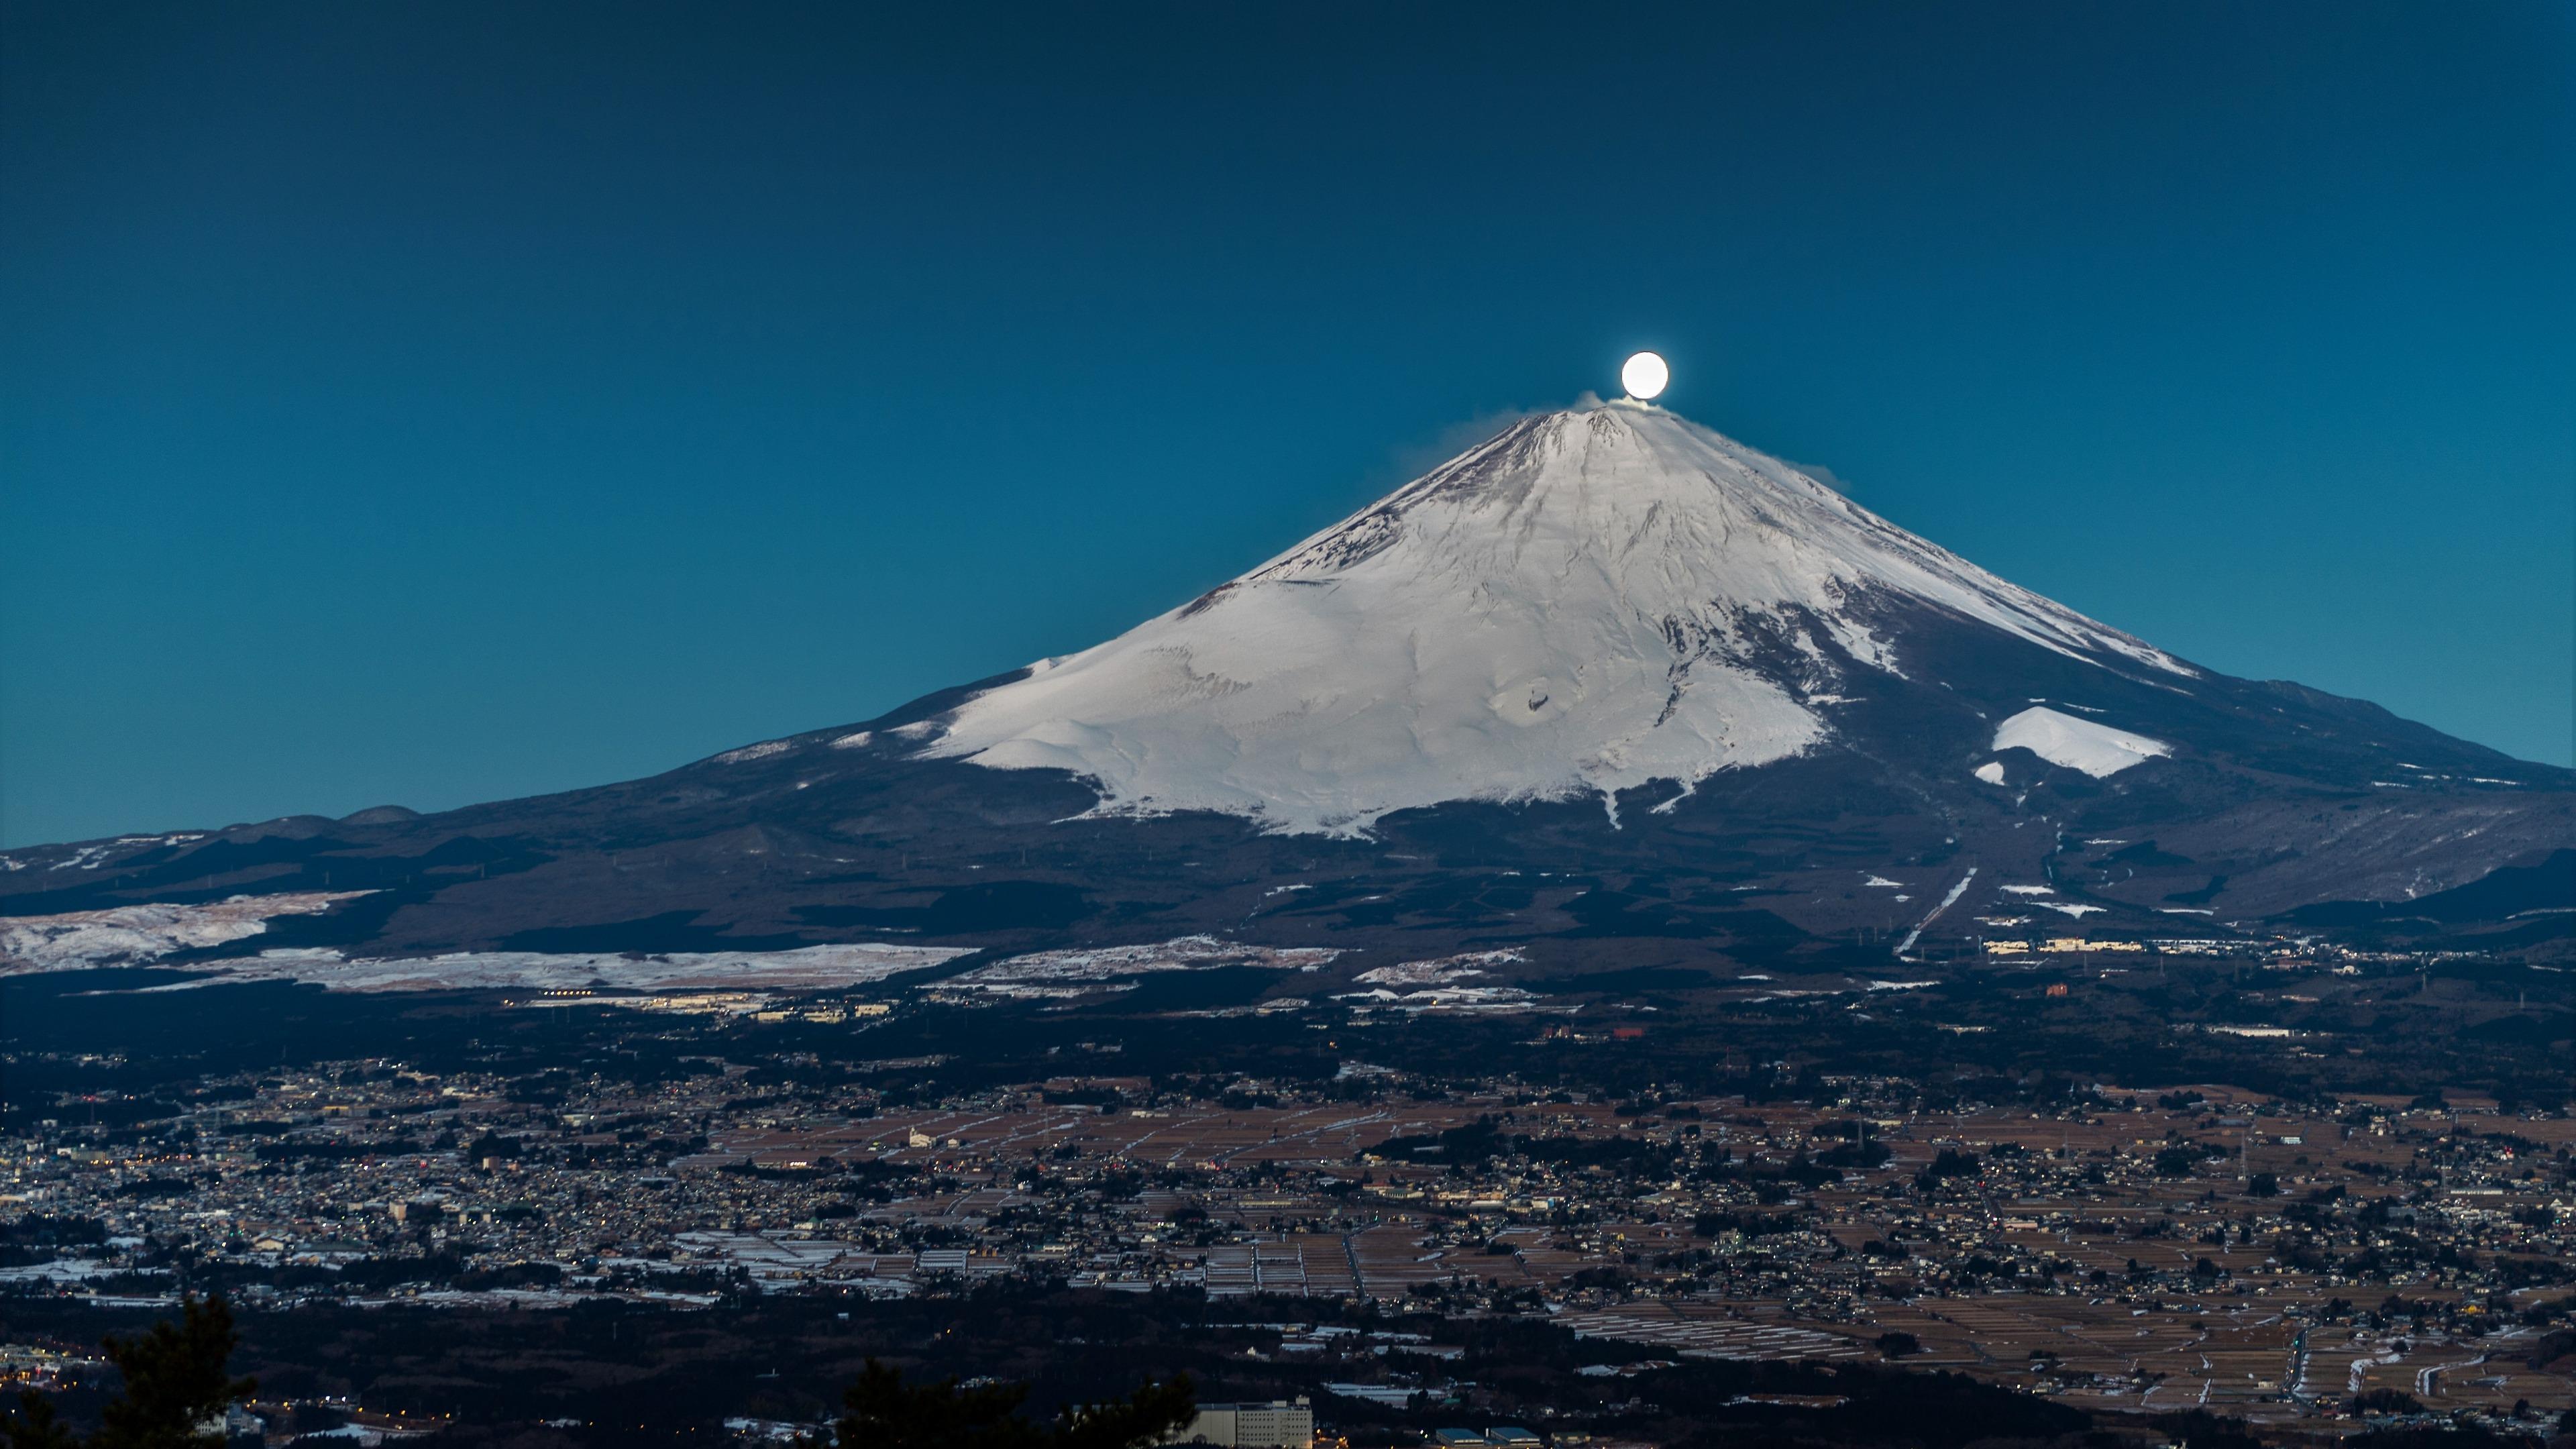 Full Moon On The Top Of Mount Fuji 4K UltraHD Wallpaper. Wallpaper